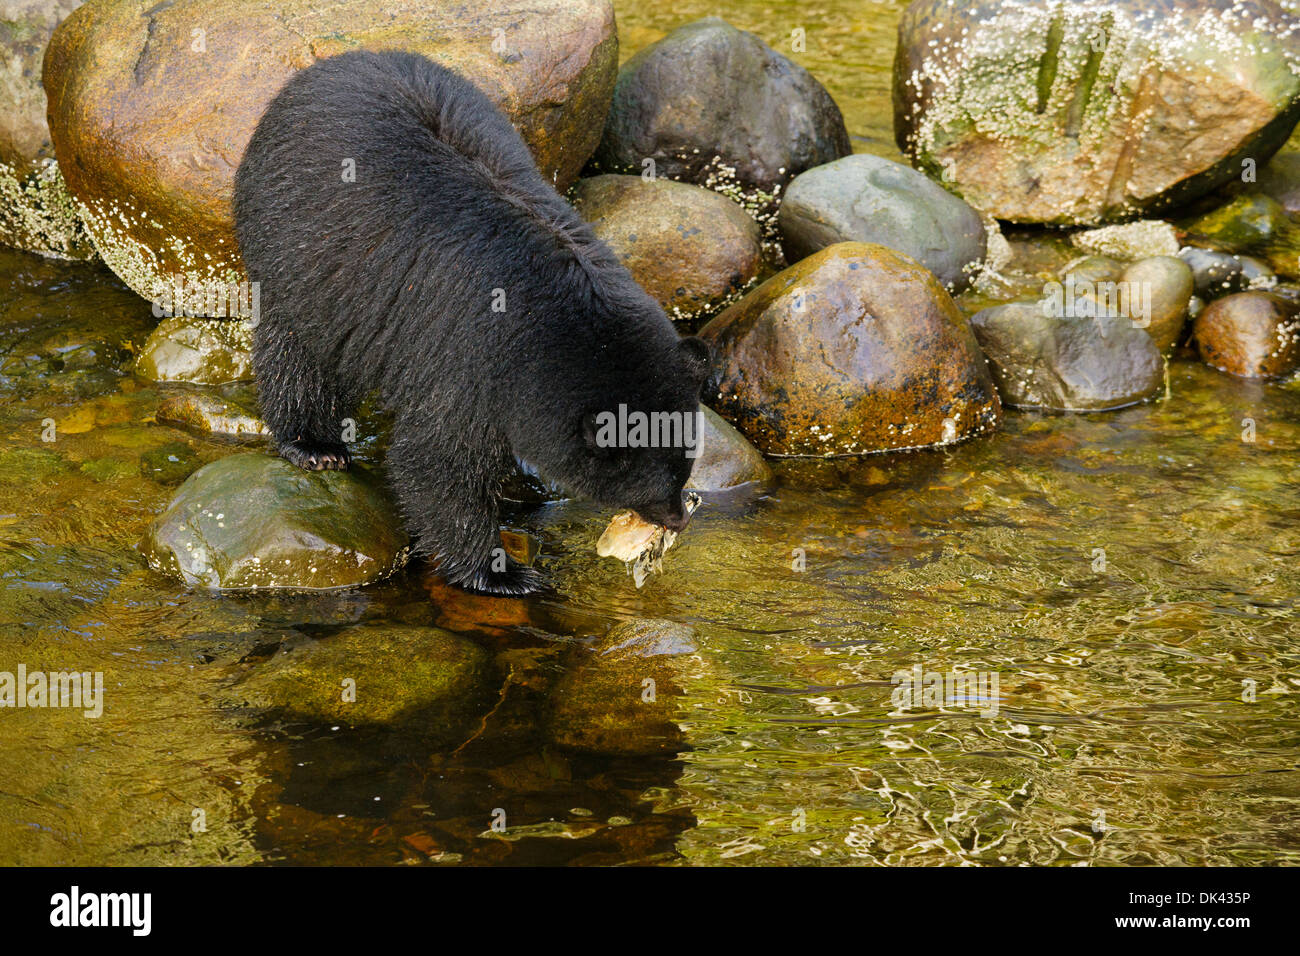 Black bear on rocks with Chum salmon head in mouth at Thornton Creek Fish Hatchery-Ucluelet, British Columbia, Canada. Stock Photo